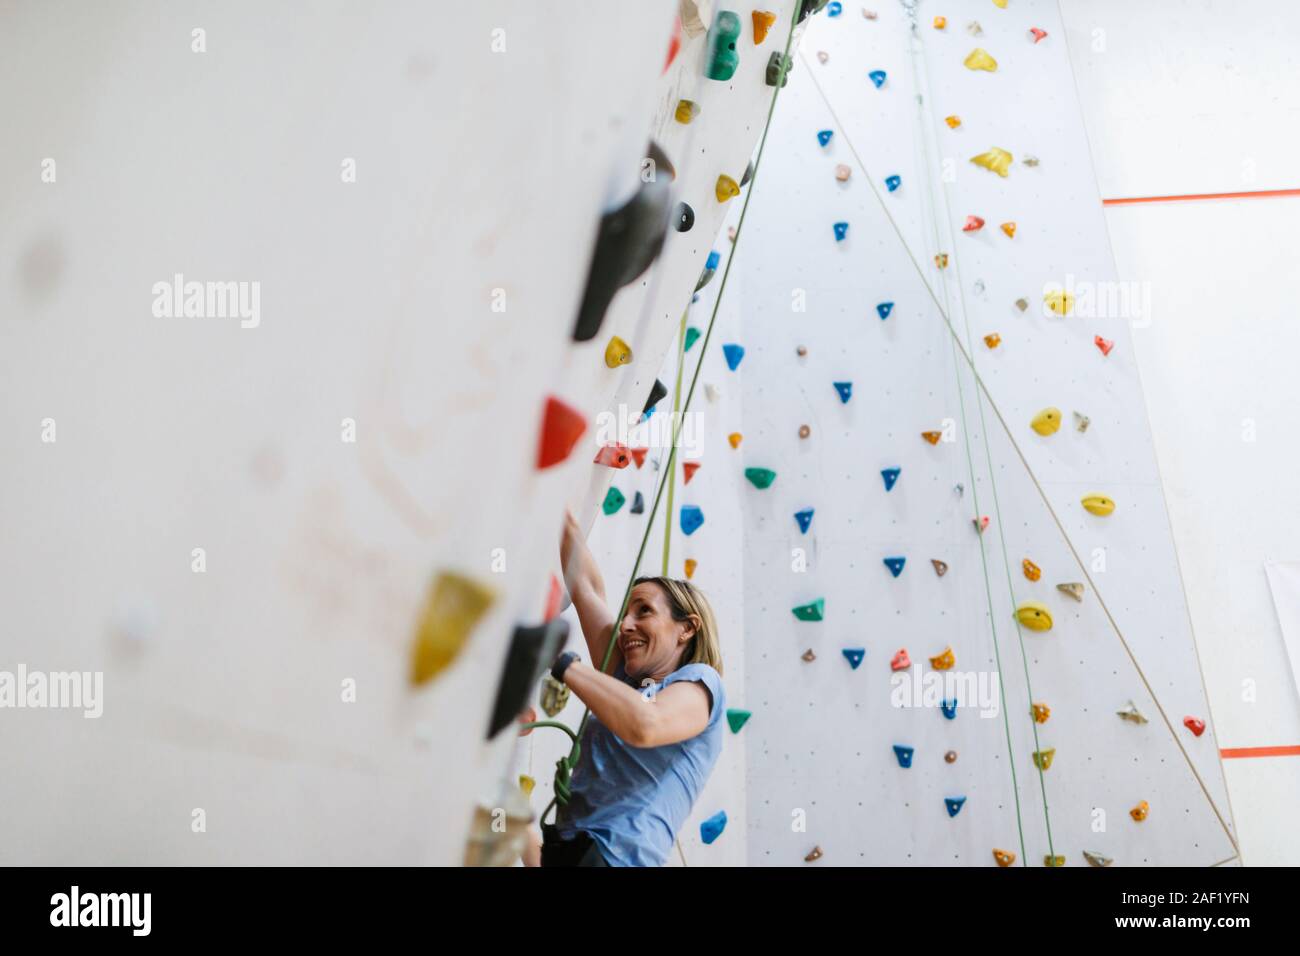 Woman on climbing wall Stock Photo